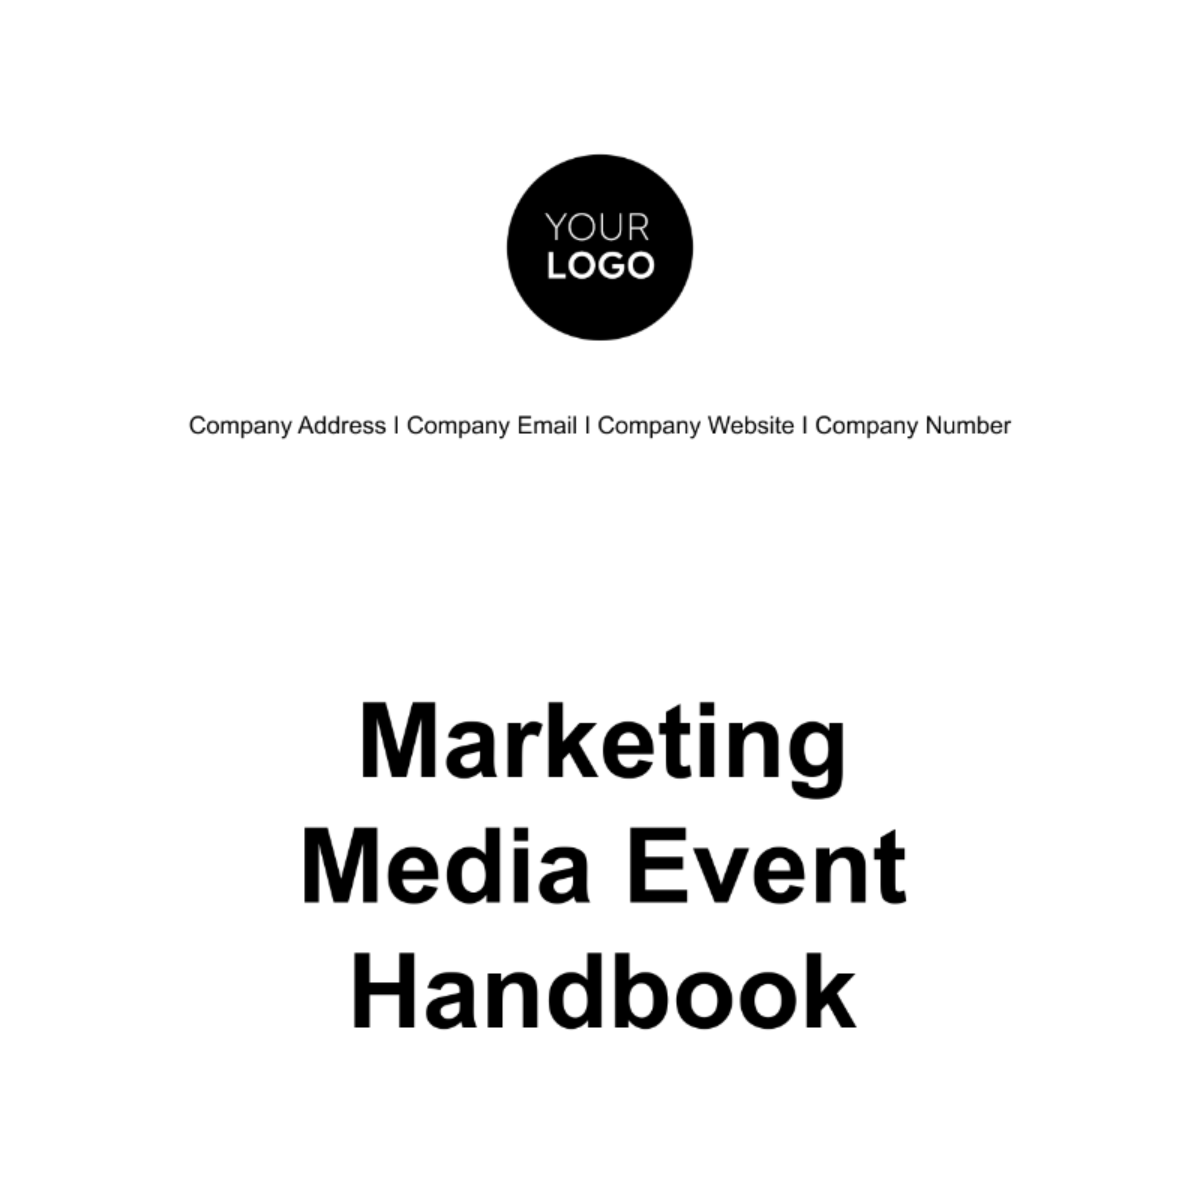 Marketing Media Event Handbook Template